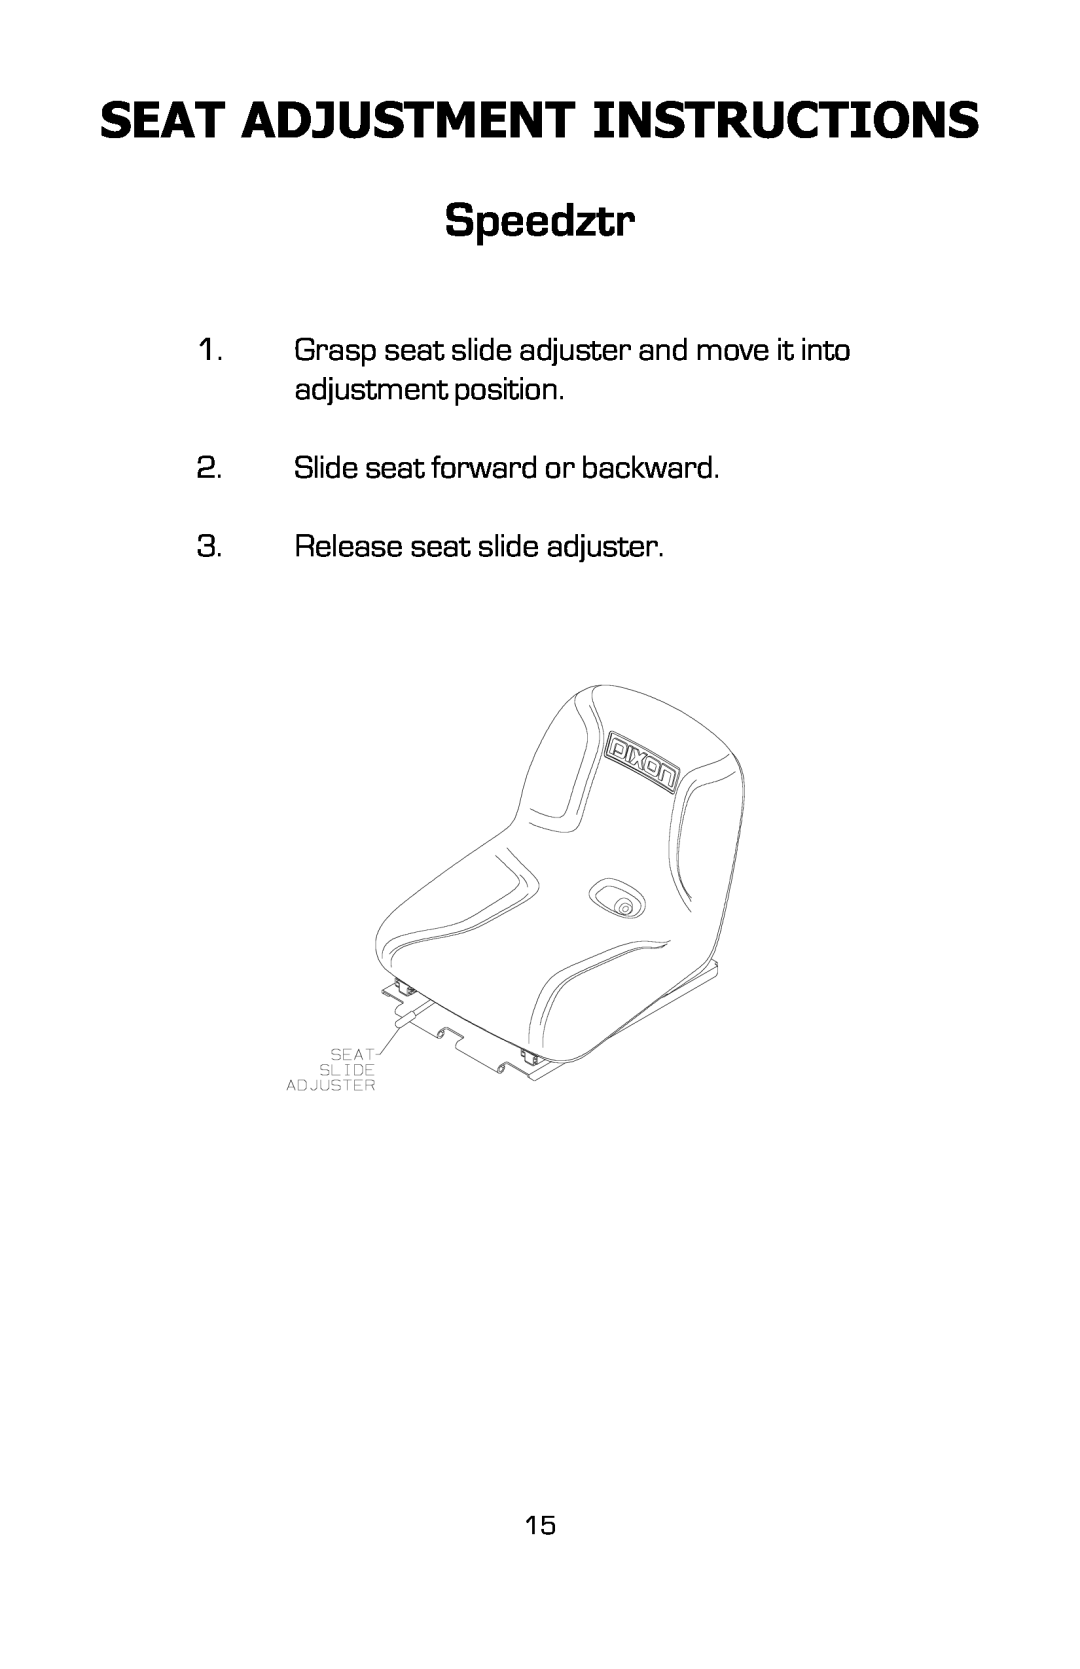 Dixon 16134-0803 Seat Adjustment Instructions, Speedztr, Grasp seat slide adjuster and move it into adjustment position 